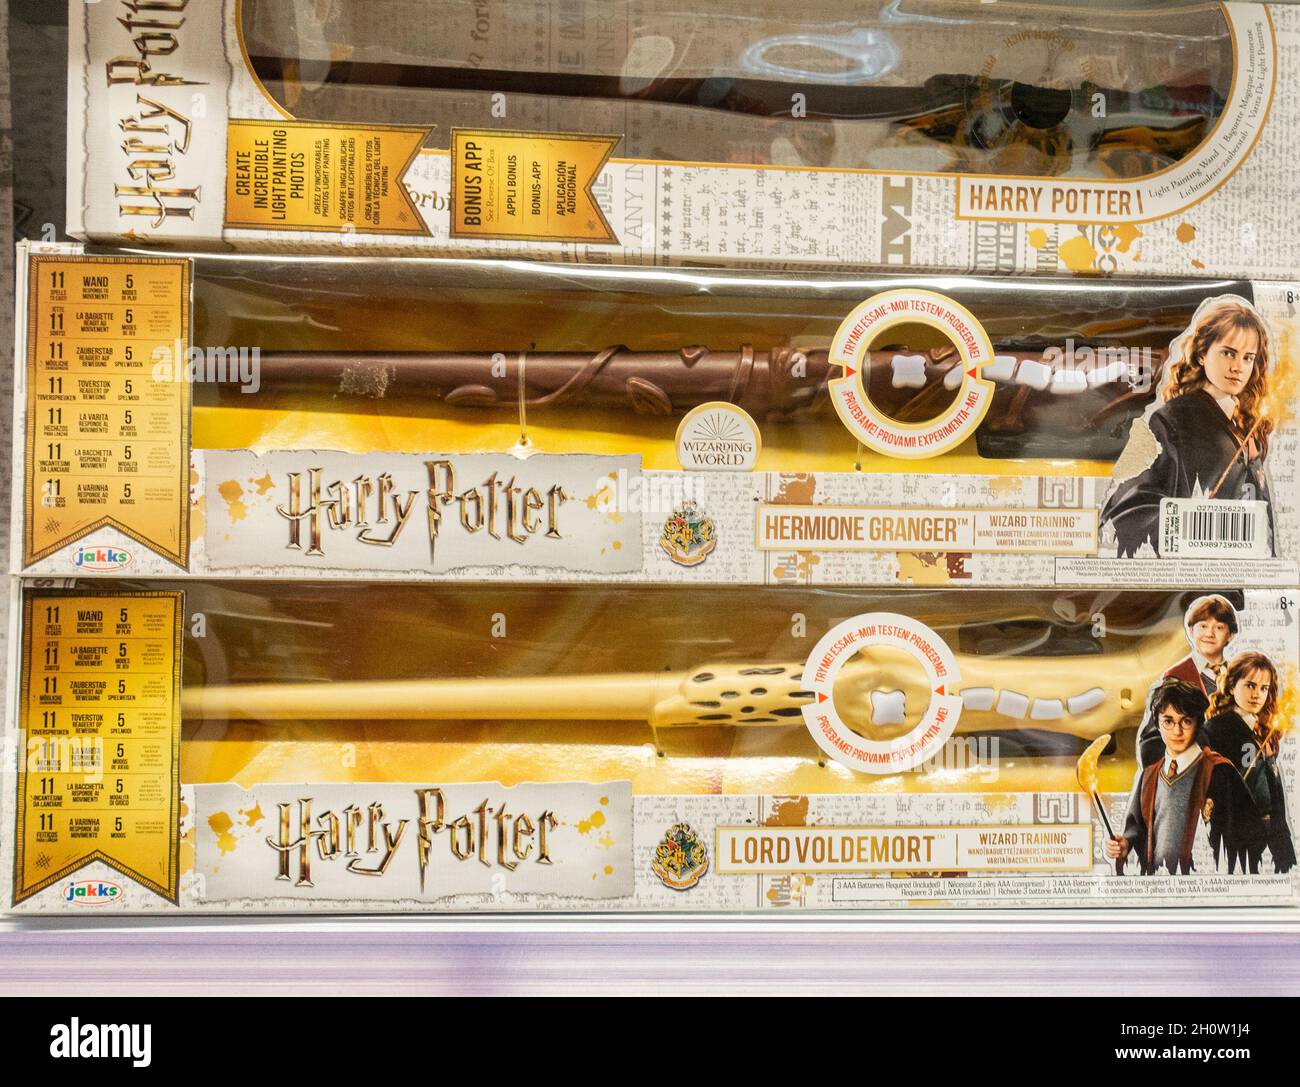 Harry Potter wands, merchandise in store in Spain Stock Photo